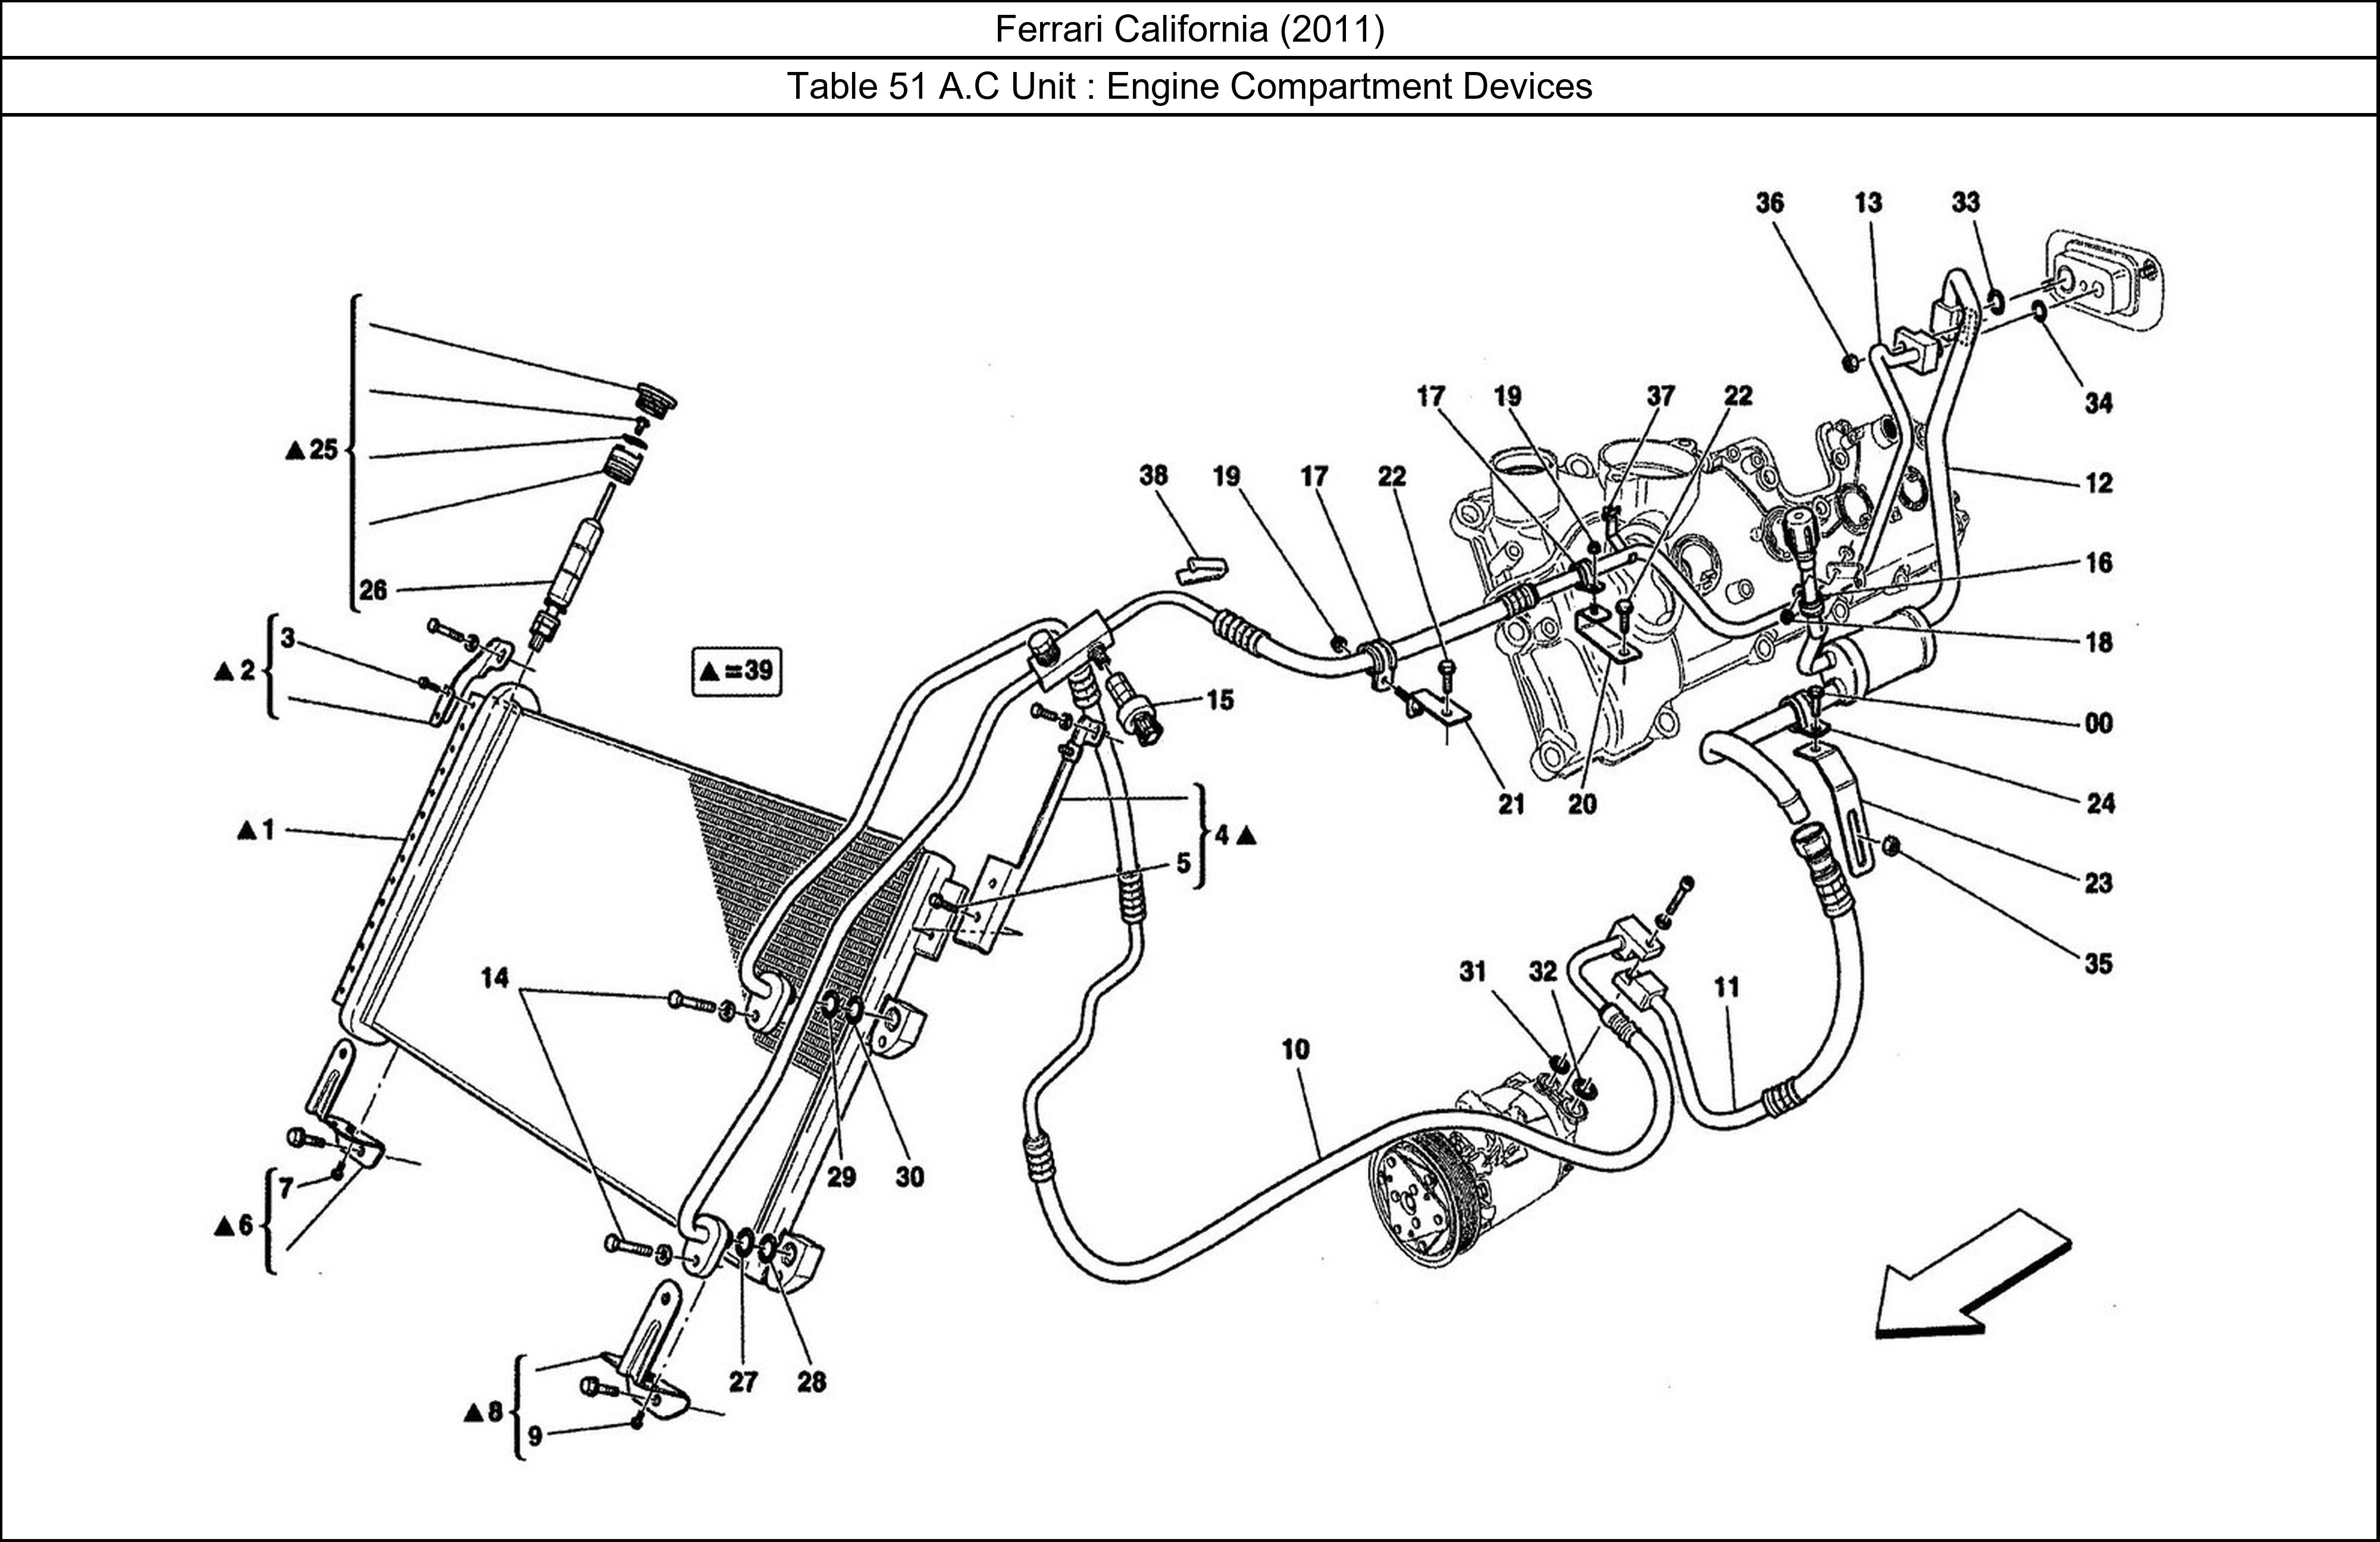 Ferrari Parts Ferrari California (2011) Table 51 A.C Unit : Engine Compartment Devices